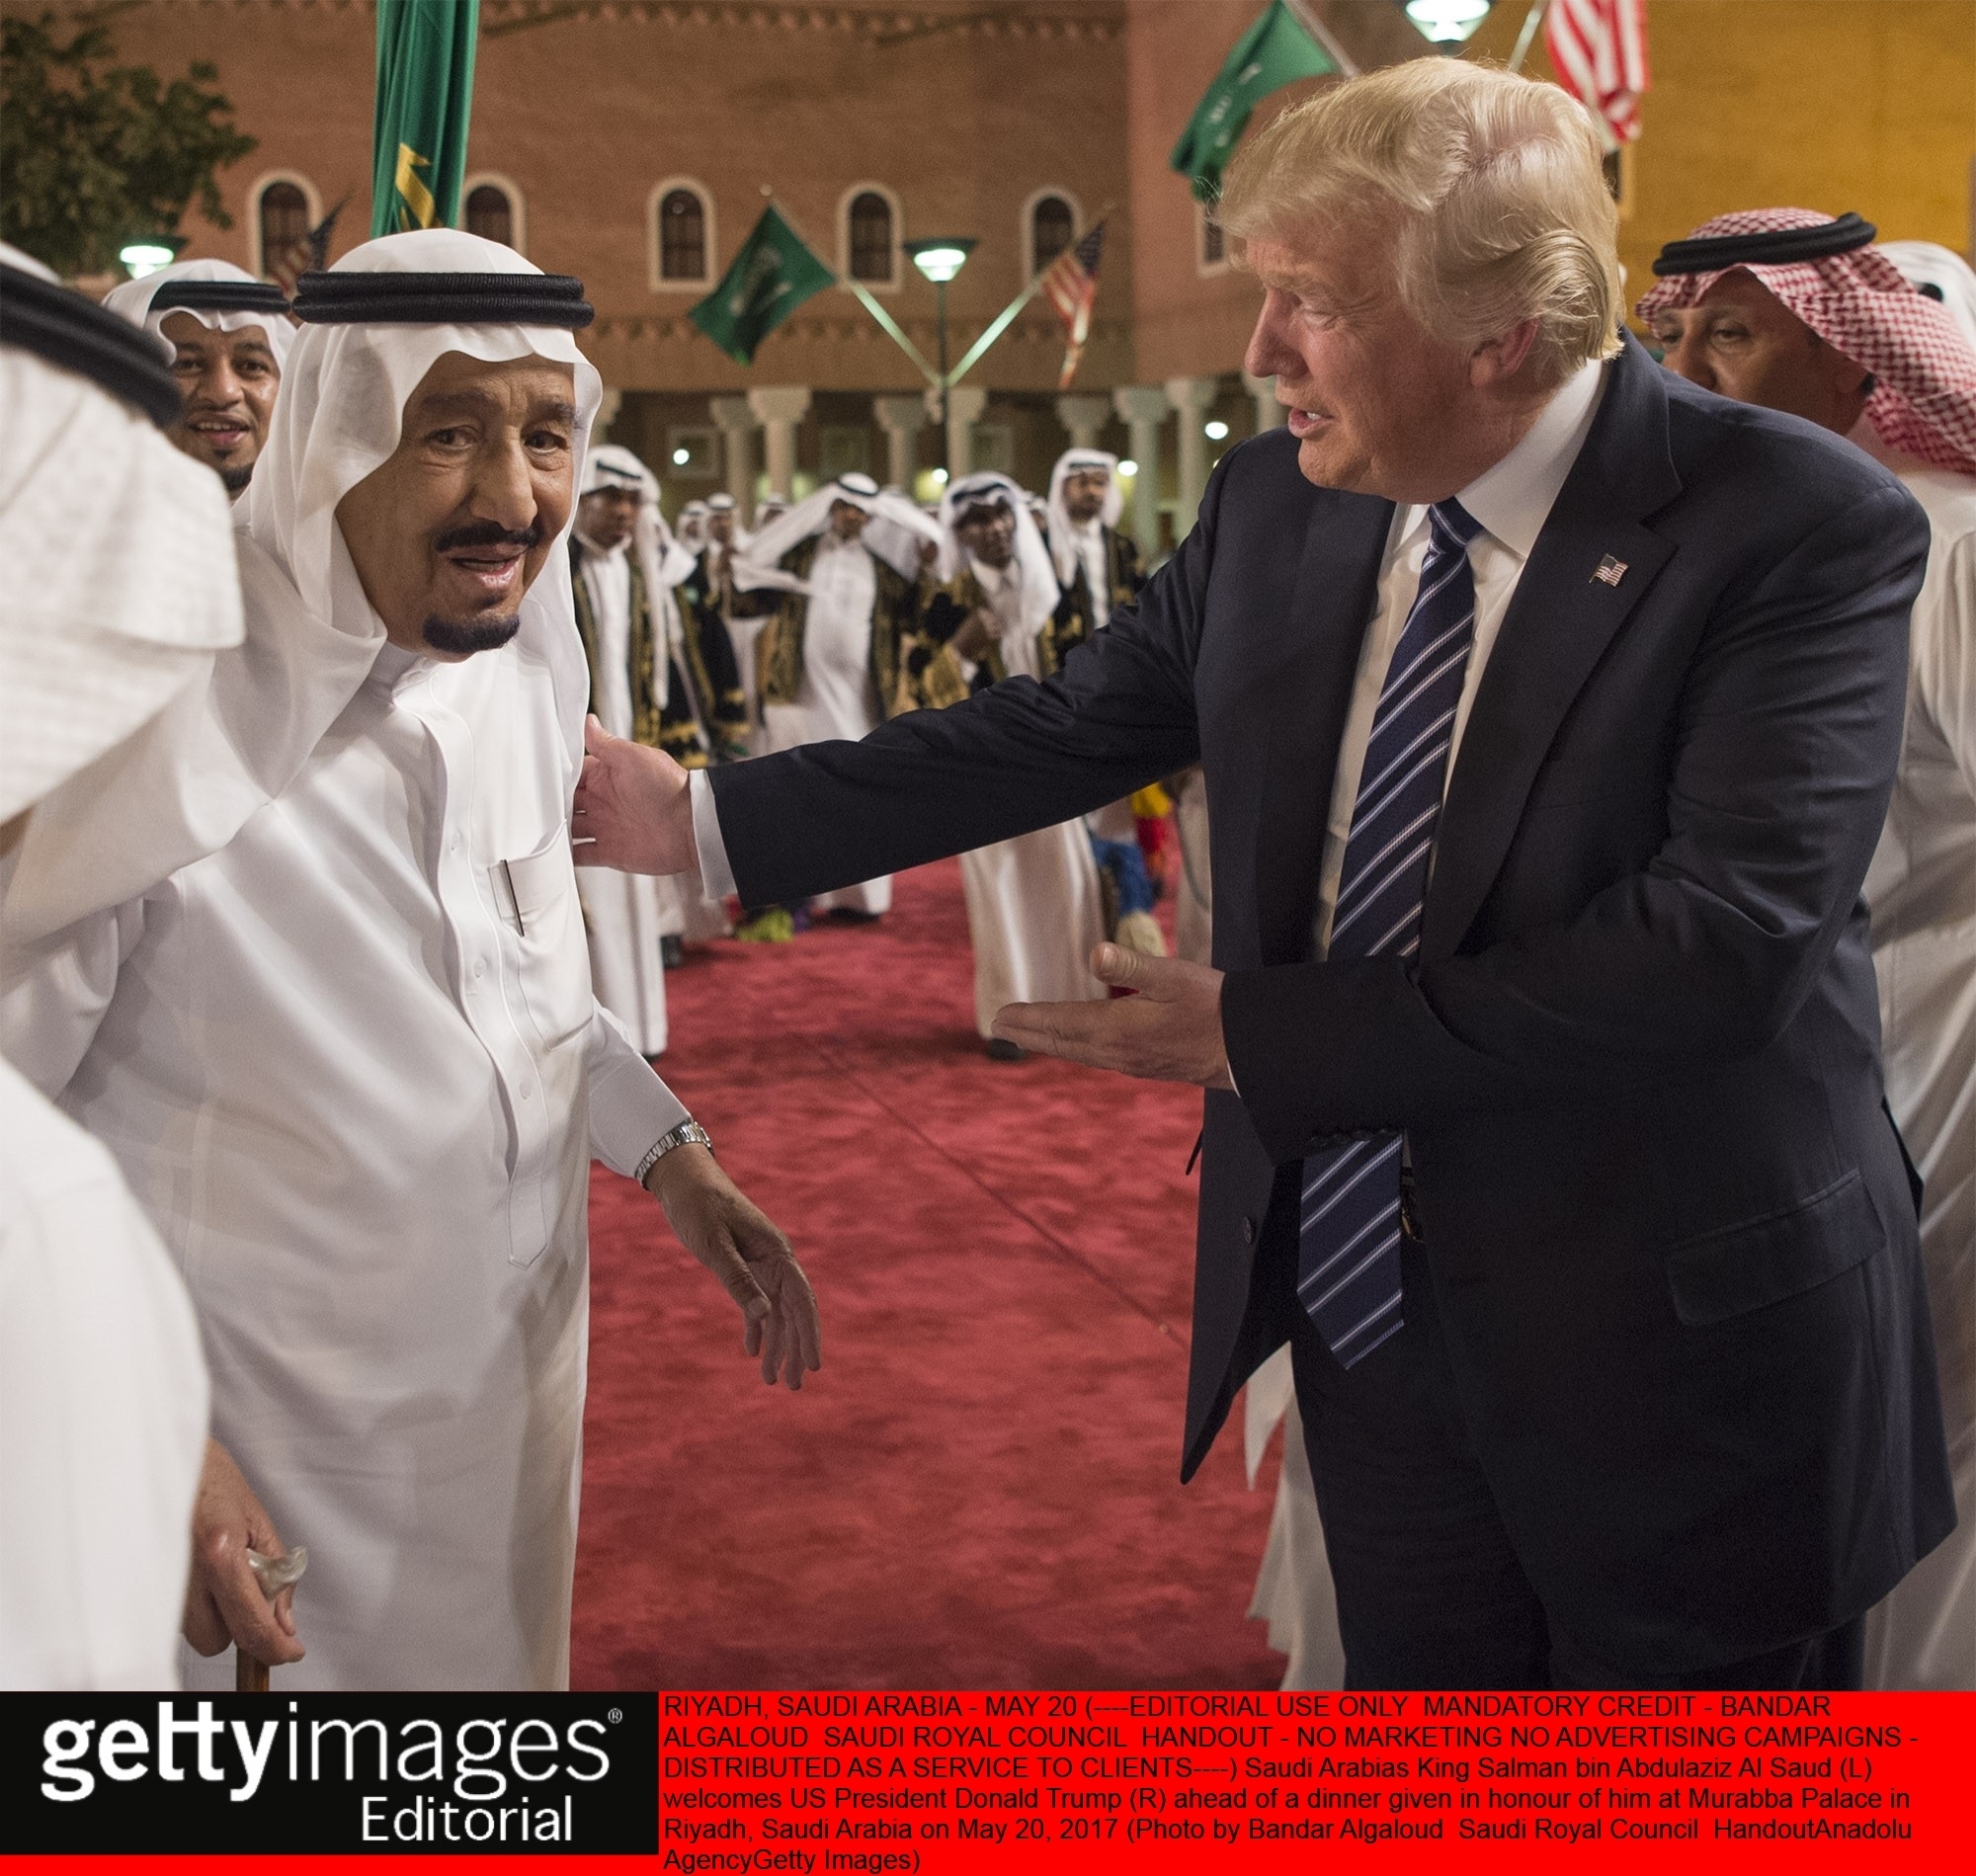 Saudi Arabia's King Salman bin Abdulaziz Al Saud (L) welcomes U.S. President Donald Trump (R) ahead of a dinner given in honour of him at Murabba Palace in Riyadh, Saudi Arabia